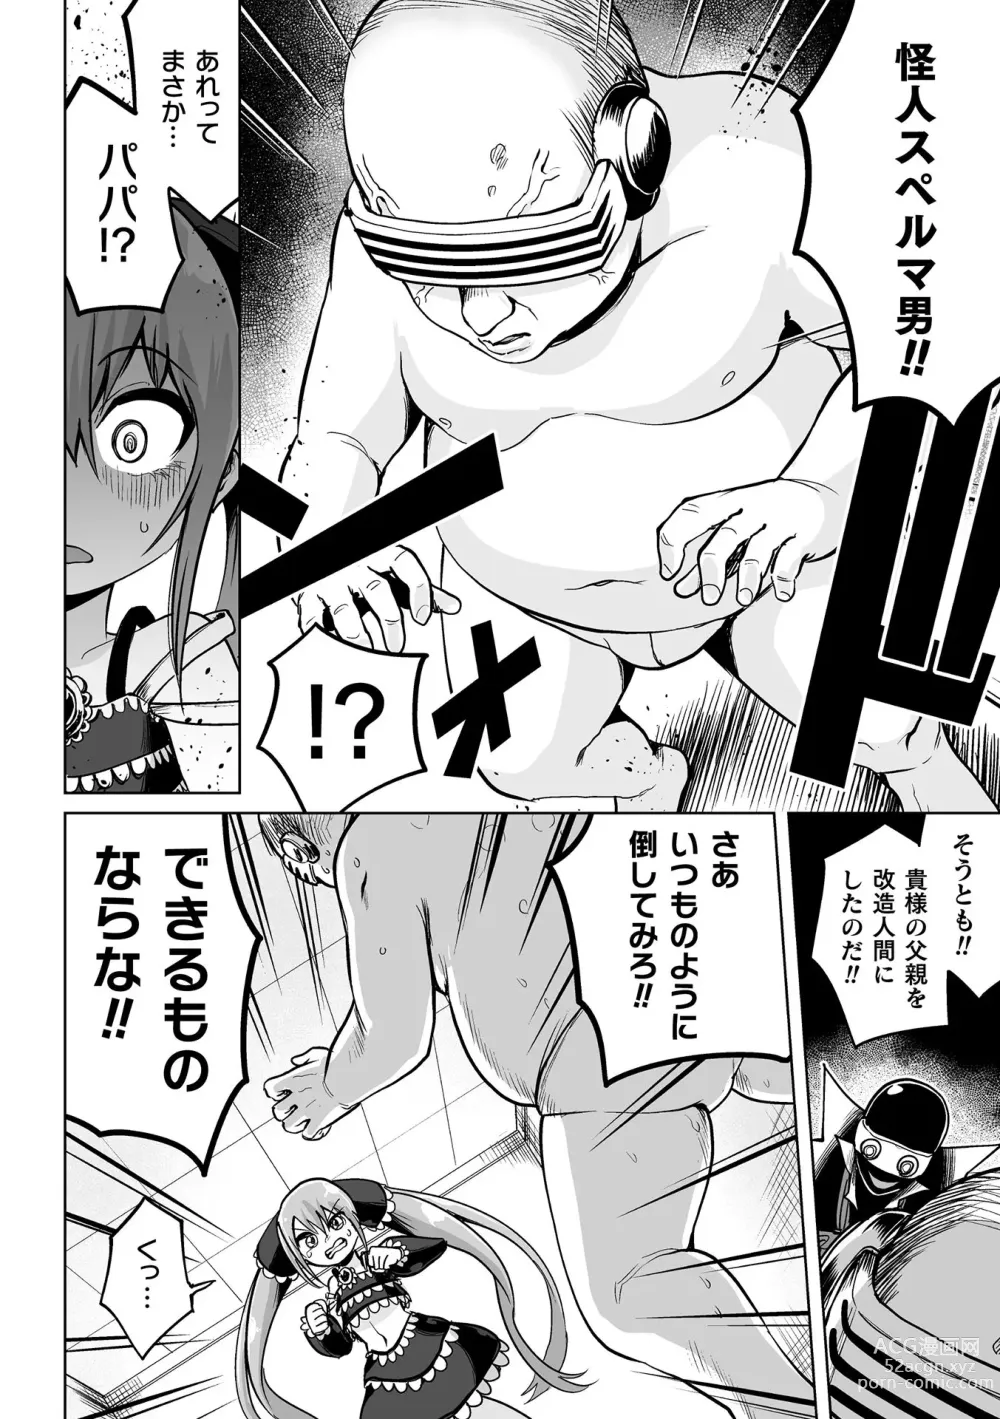 Page 154 of manga Kukkoro Heroines Vol. 34